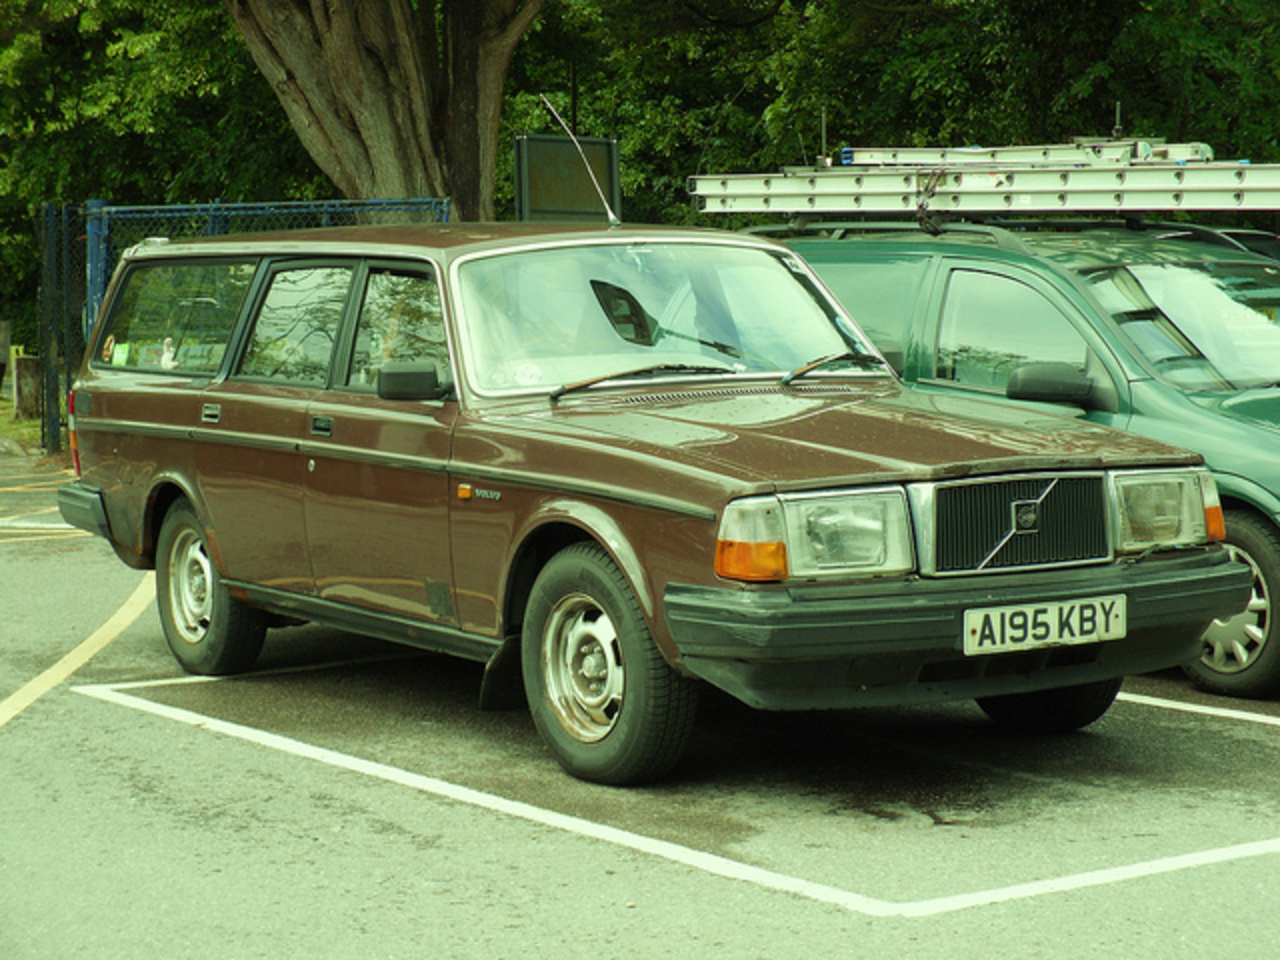 1984 Volvo 240 DL Estate. | Flickr - Photo Sharing!